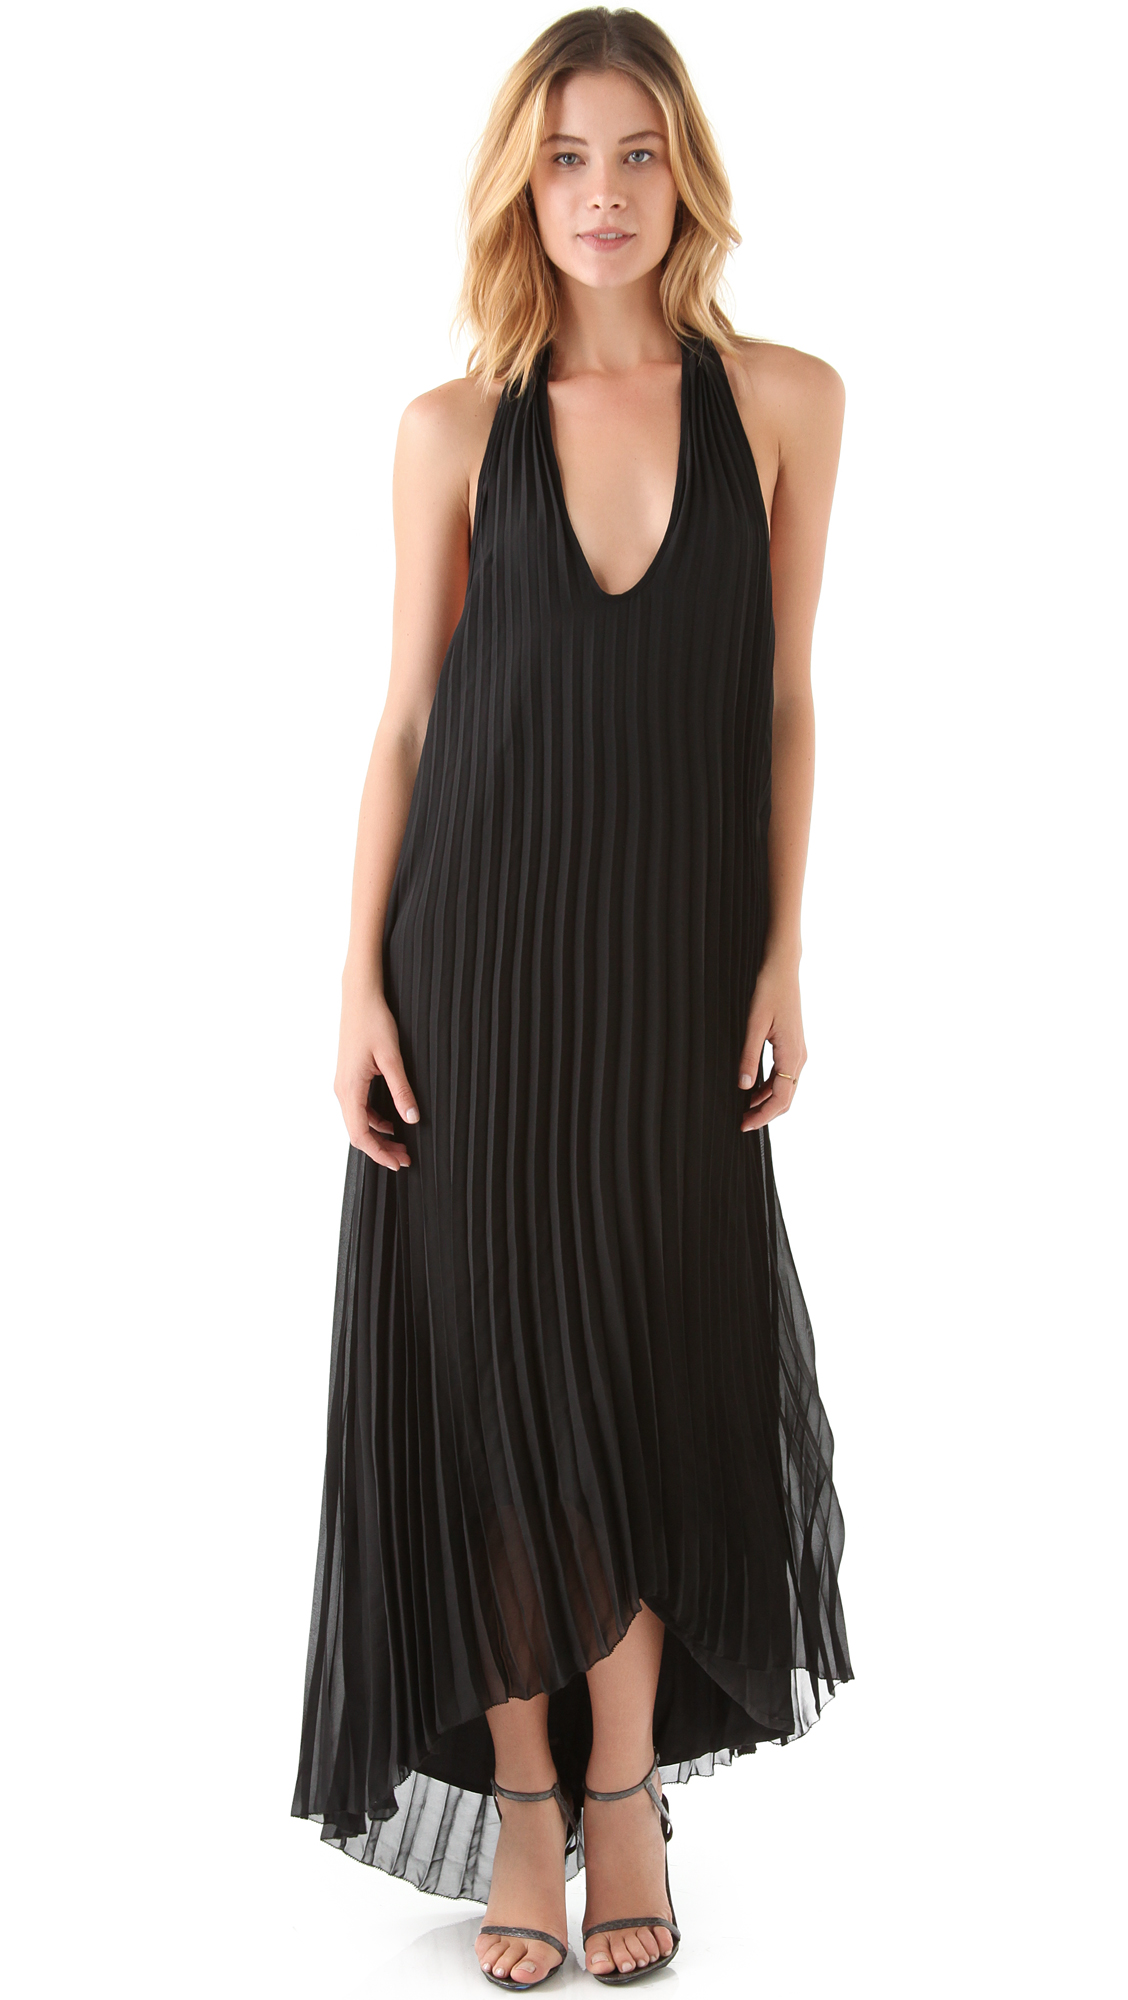 Lyst - Sheri bodell Pleated Maxi Dress in Black